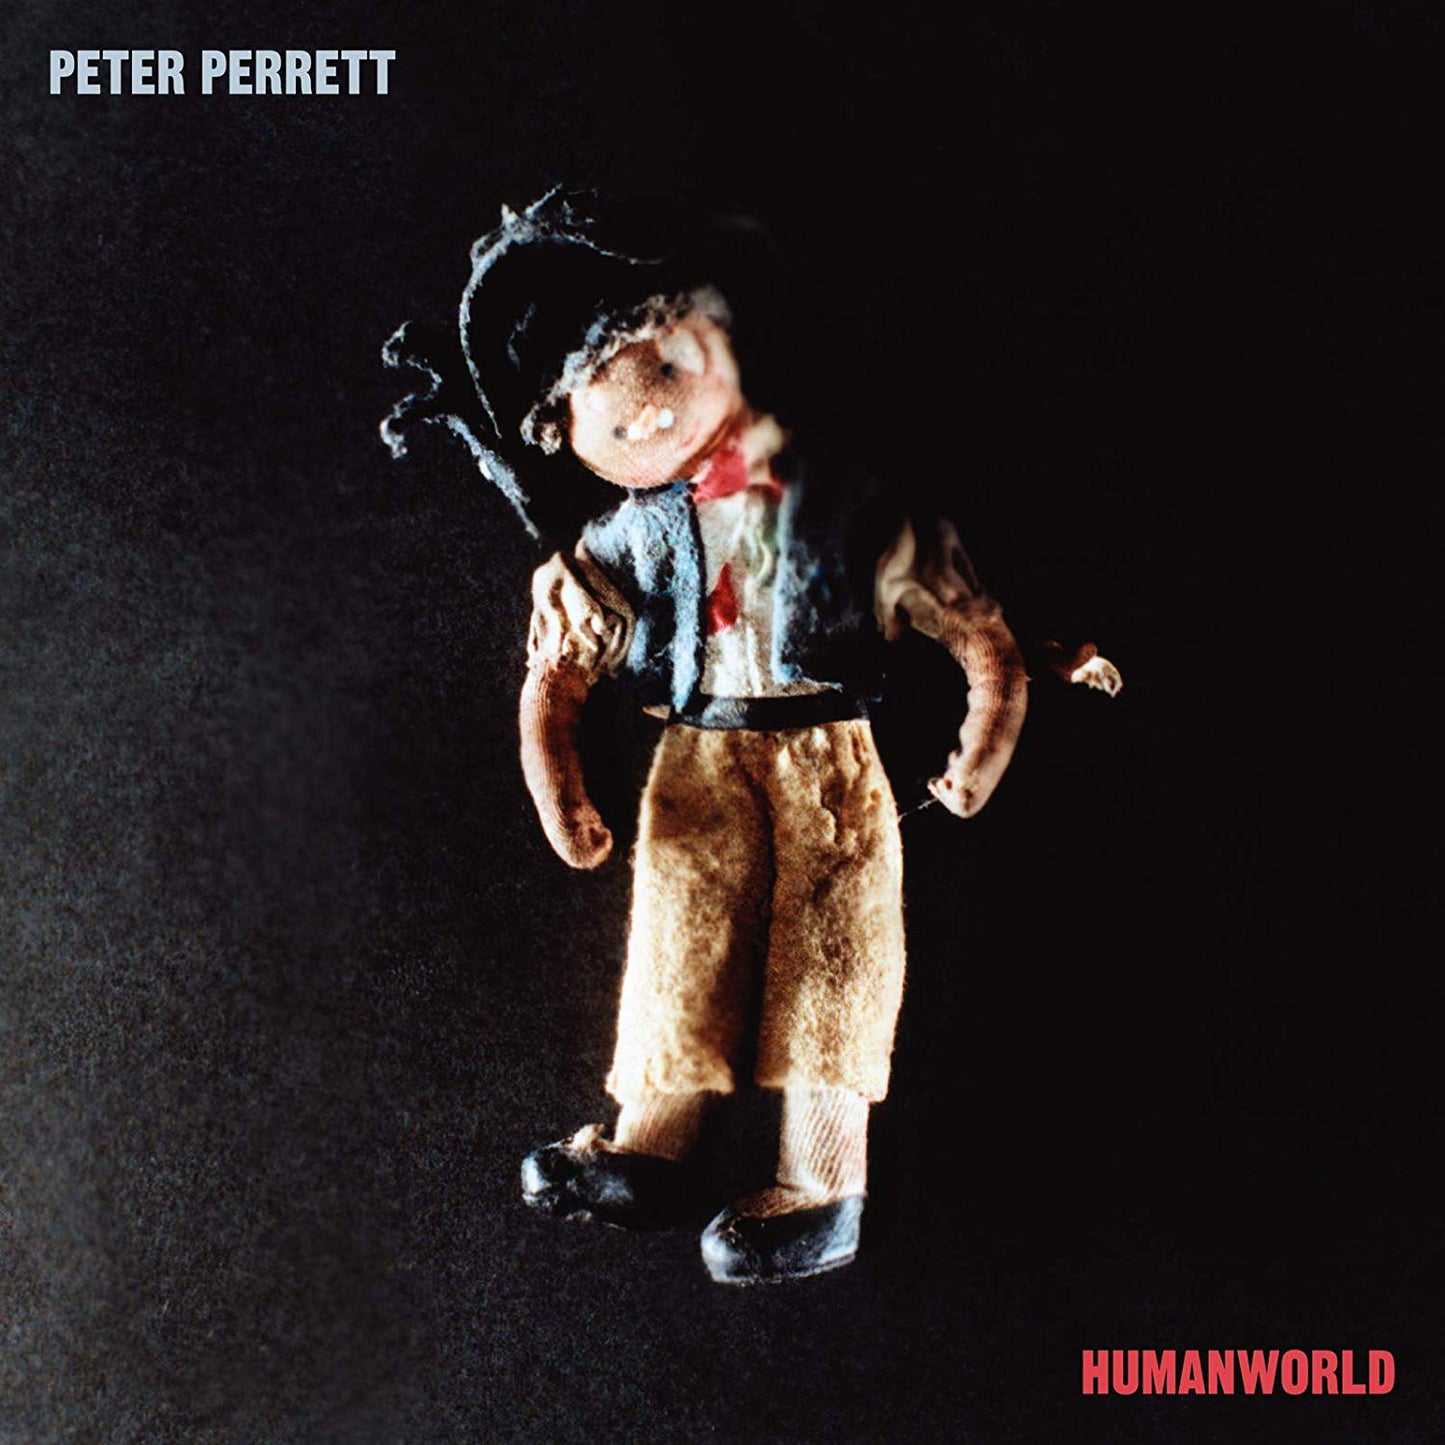 Peter Perrett - Humanworld LP